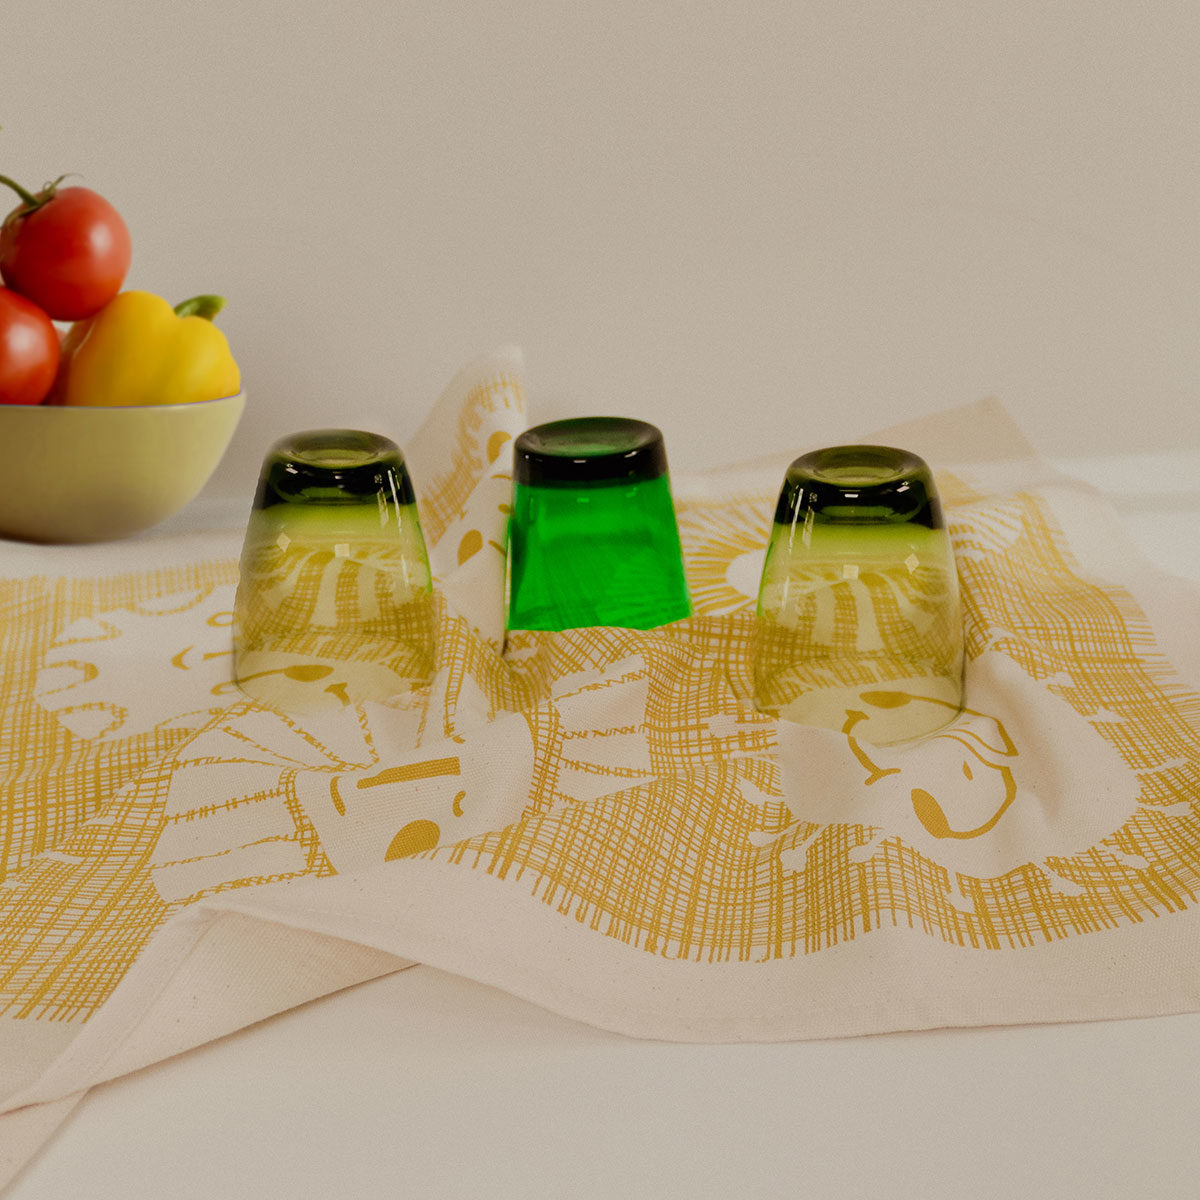 Sunnyside Tea towel by Skinny laMinx being used to dry glassware
